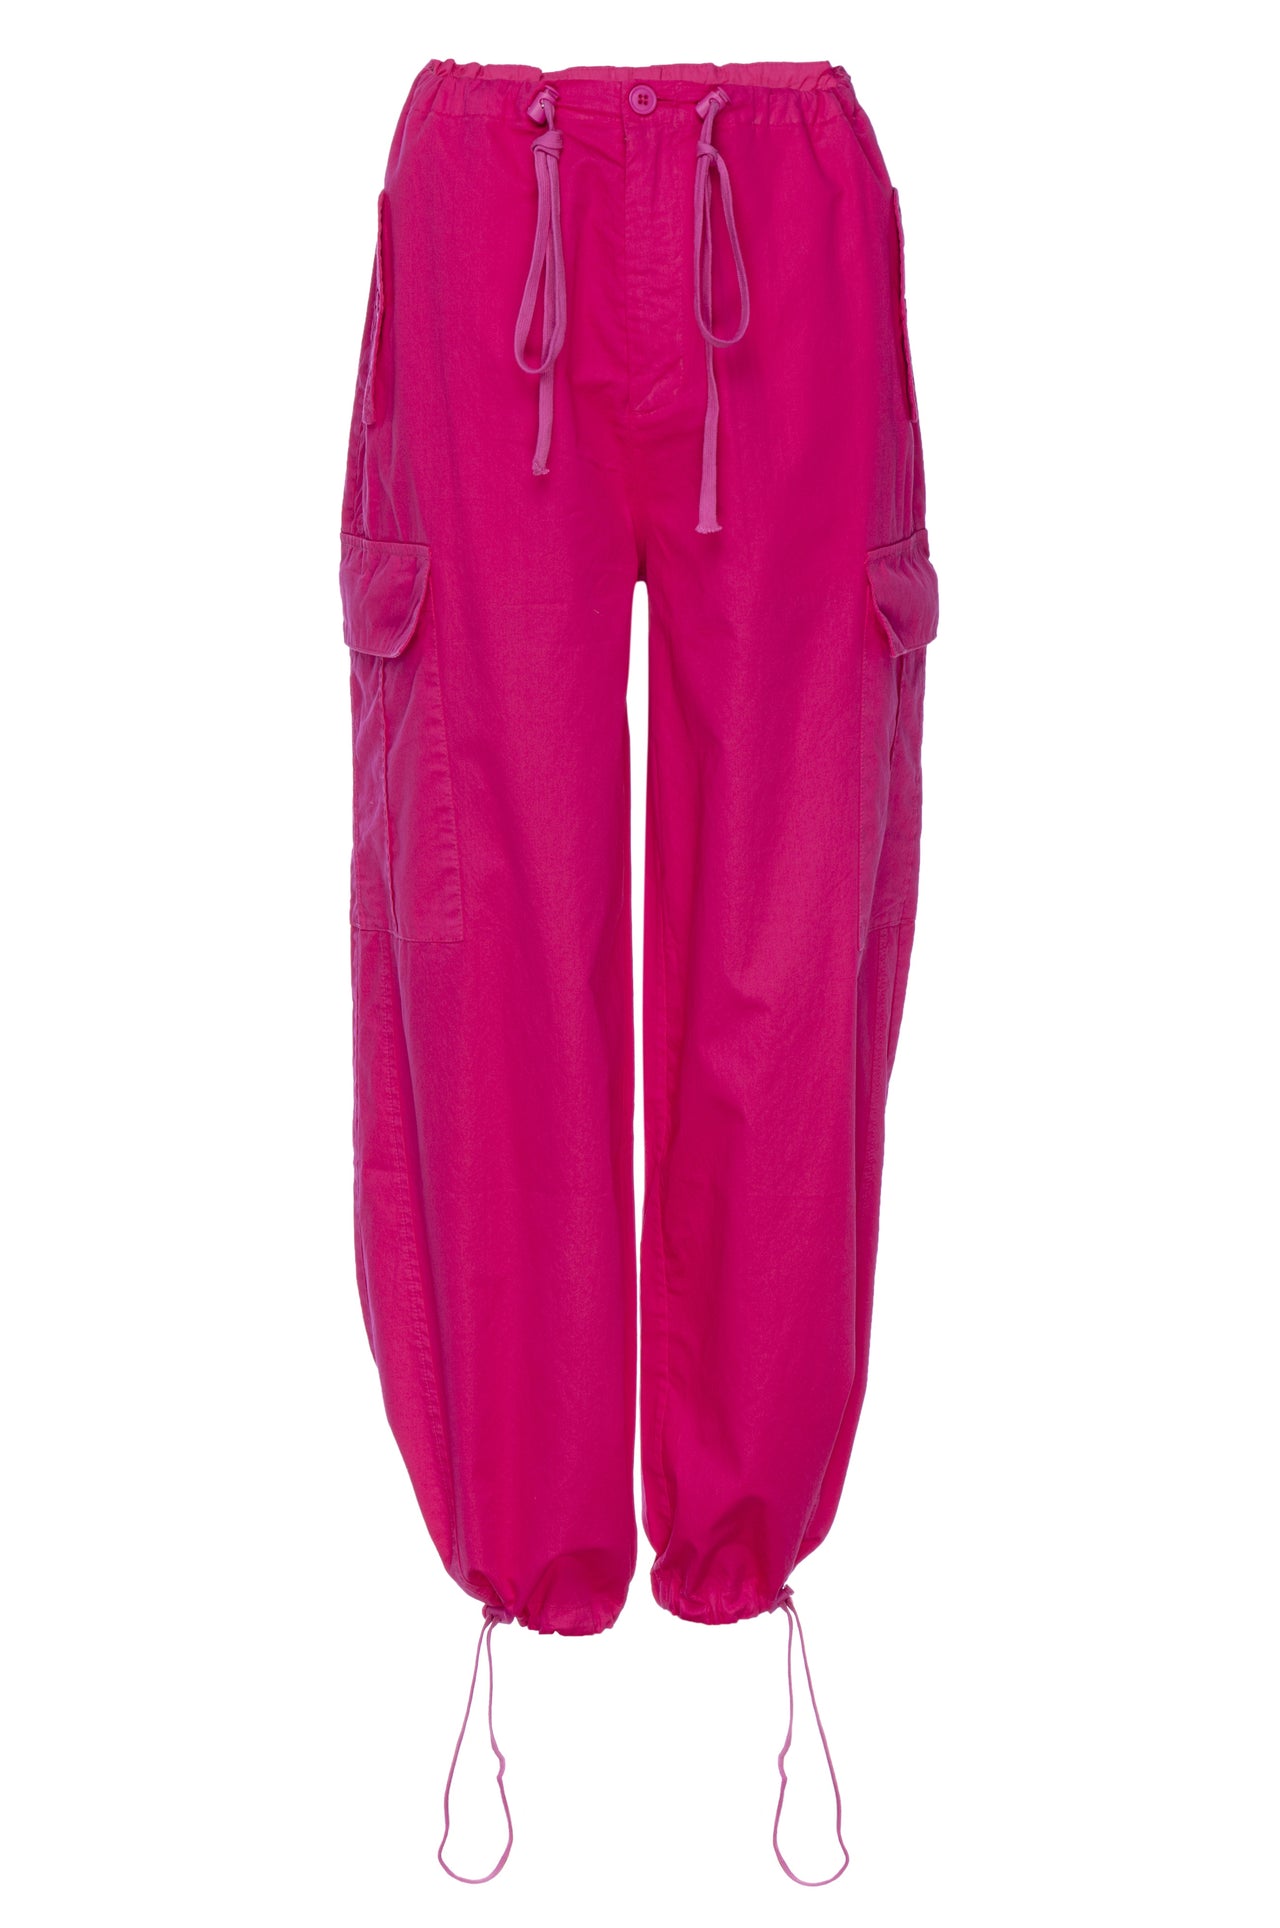 Parachute Pant Pink, Pant bottom by Good American | LIT Boutique